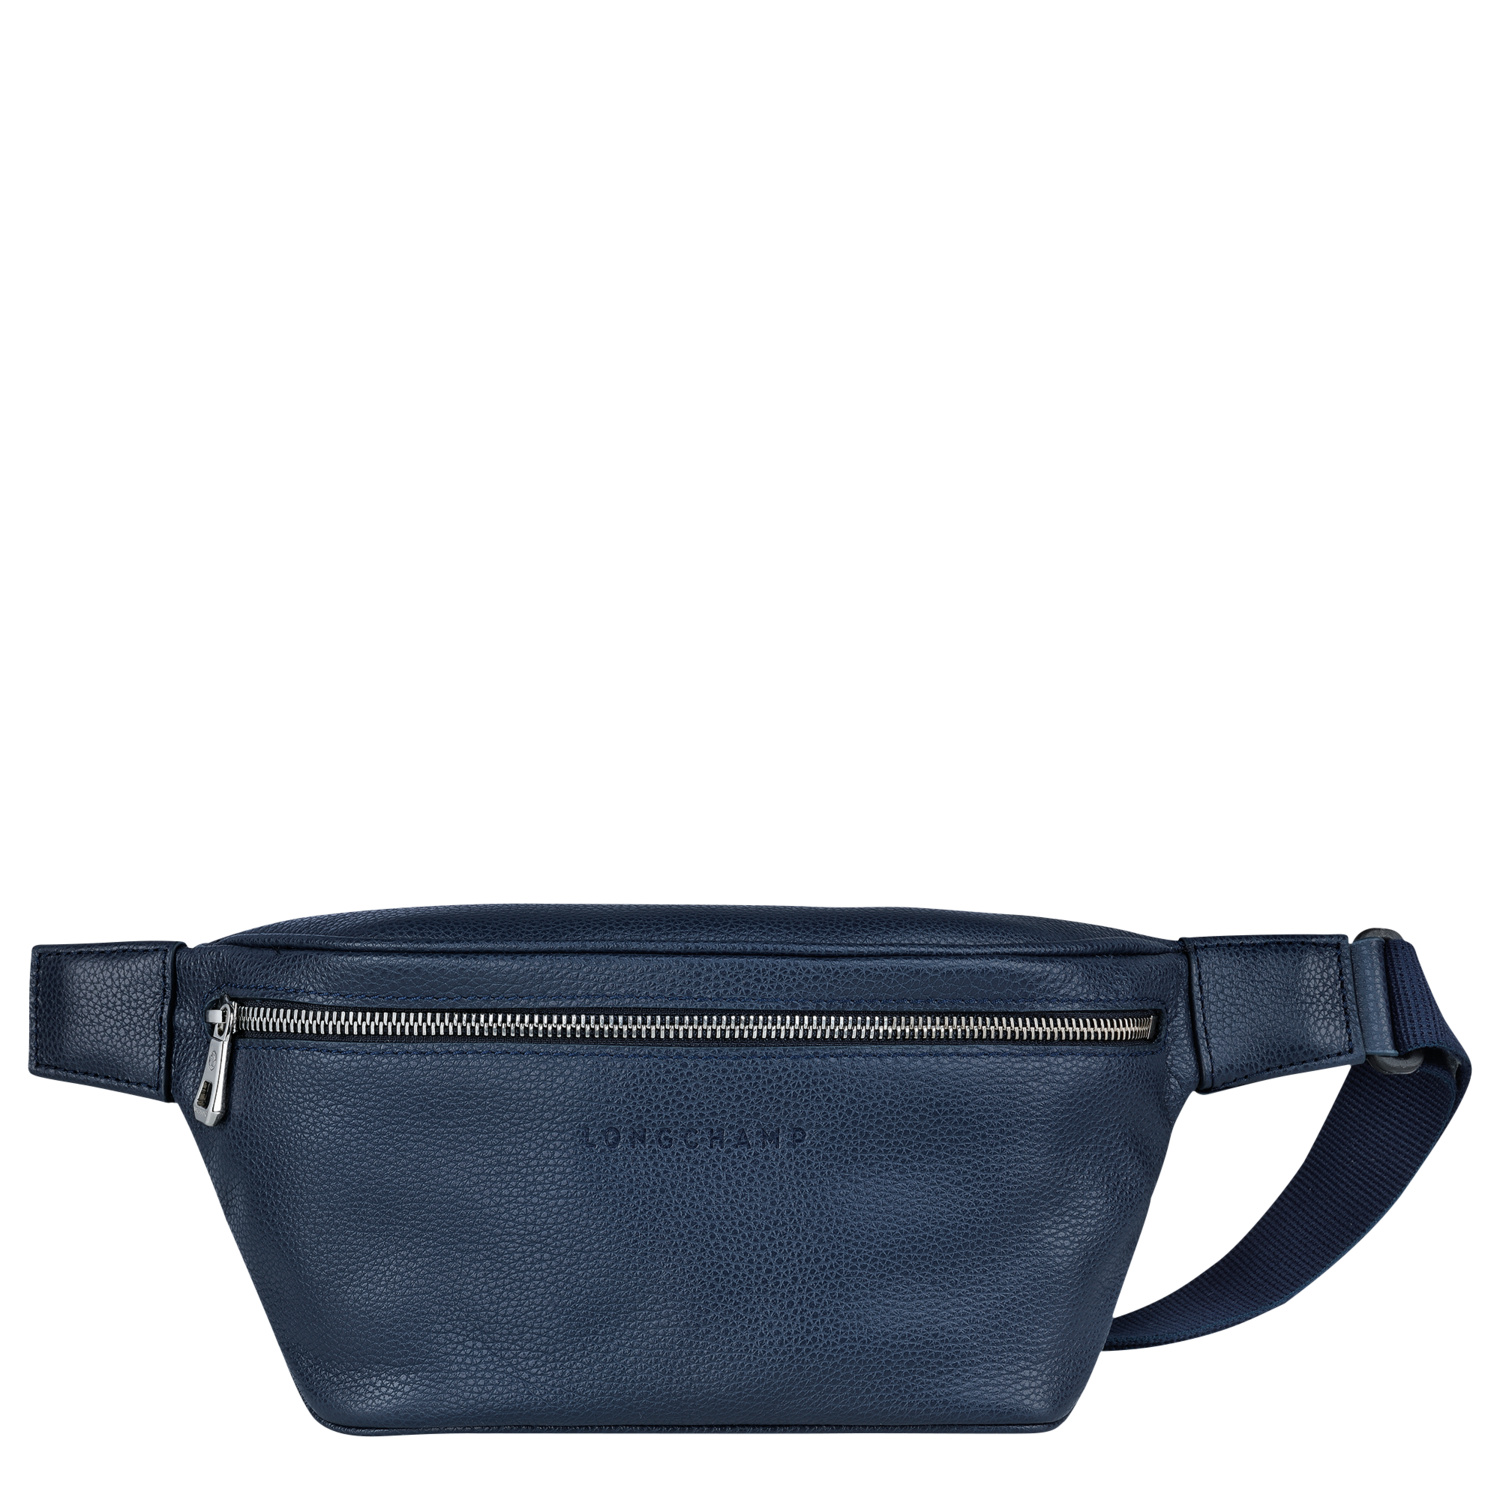 Longchamp 3D S Belt bag Sienna - Leather